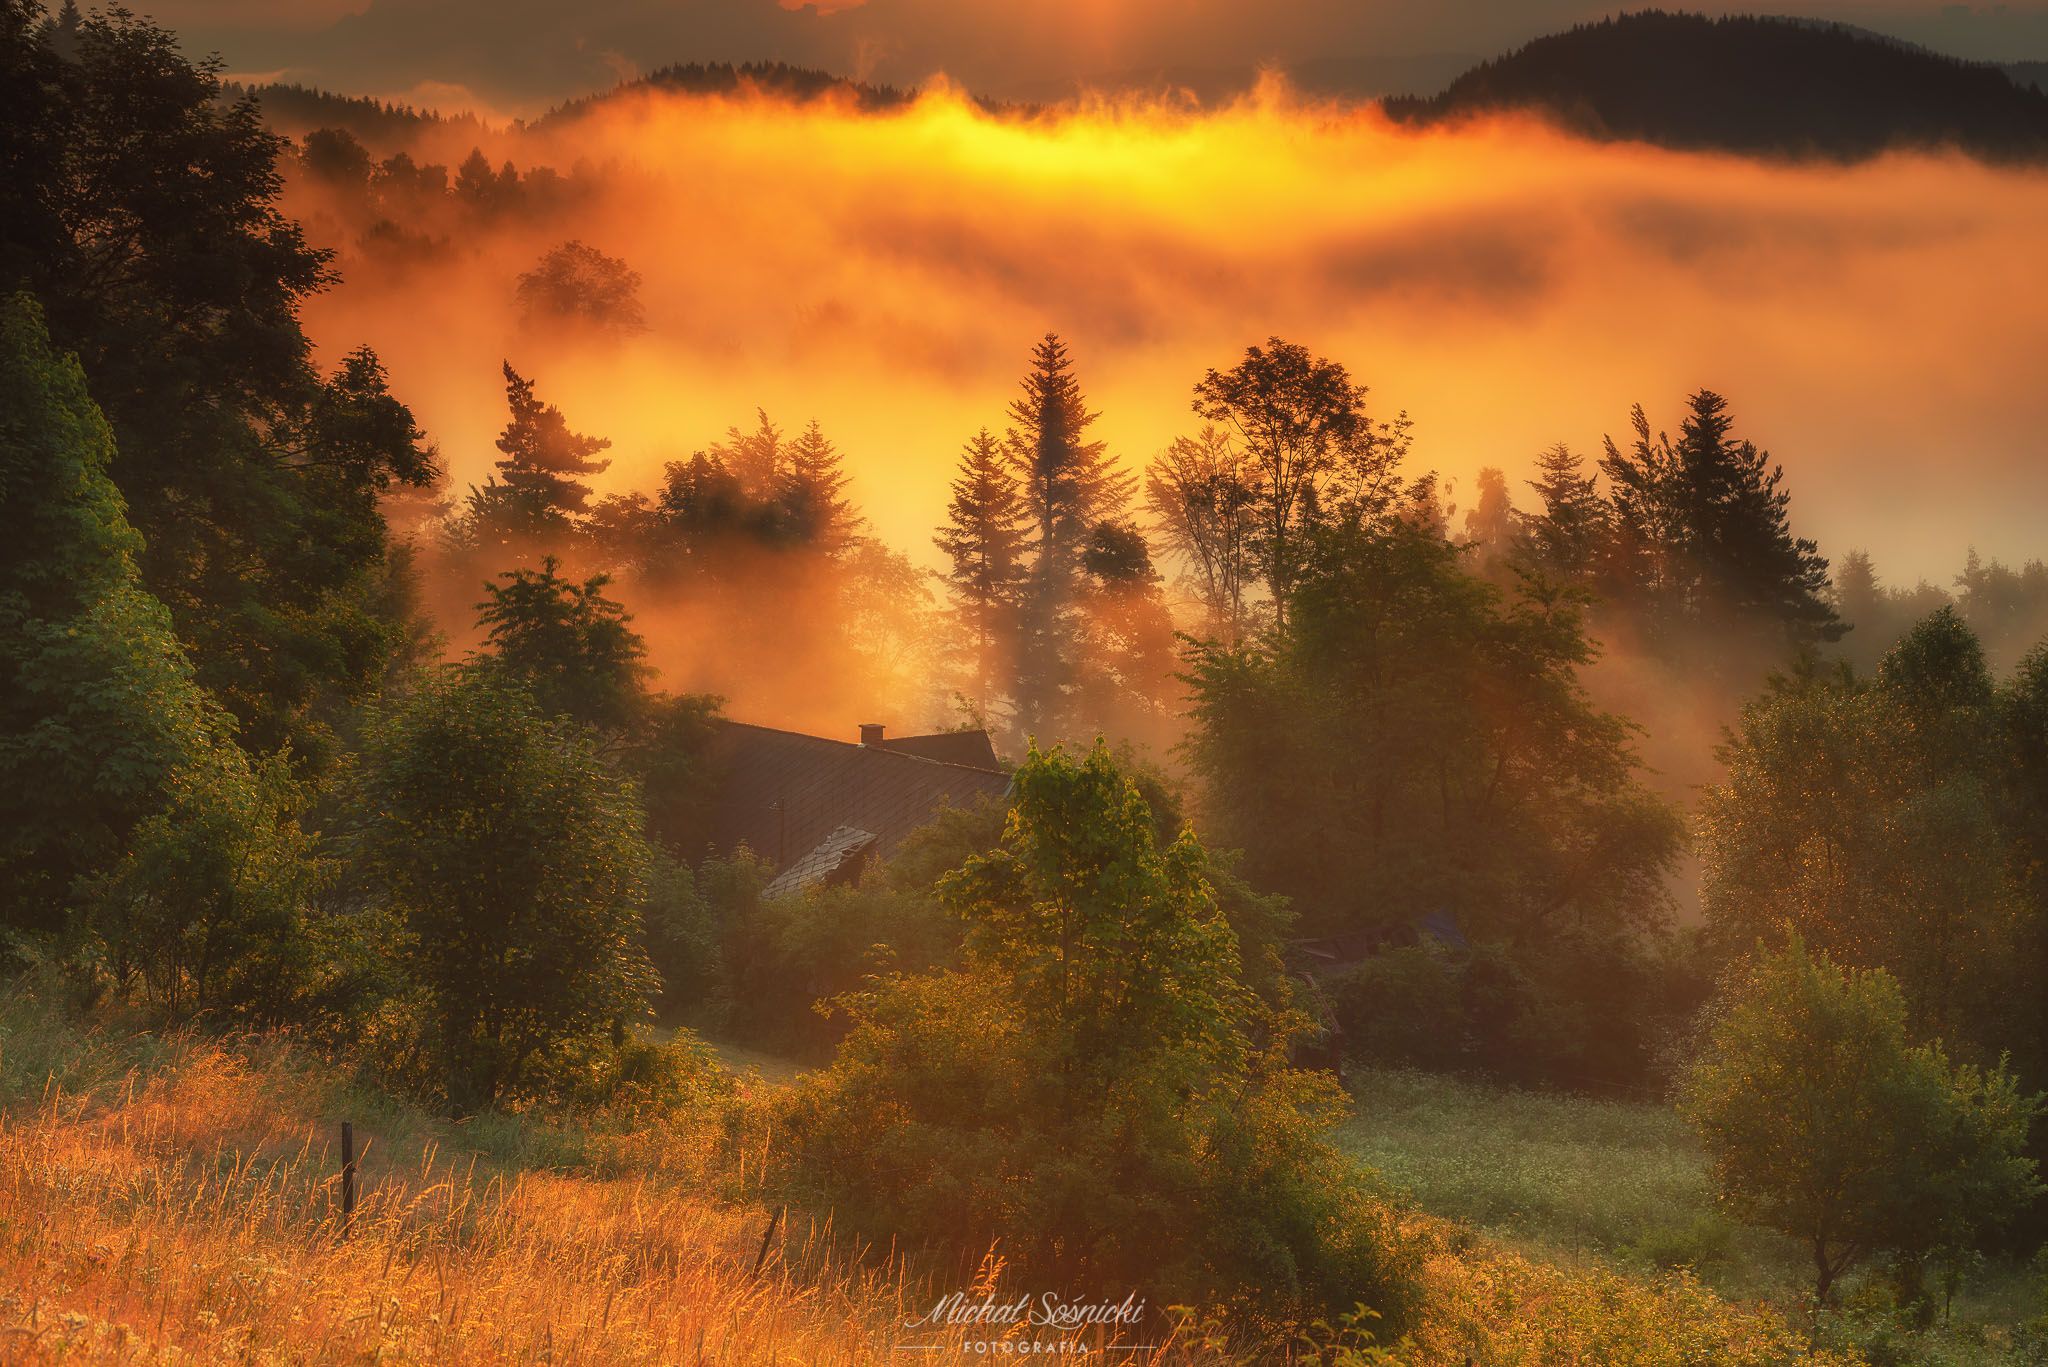 #today #morning #foggy #sunrise #trees #nature #sun #amazing #magic #pentax #benro, Michał Sośnicki